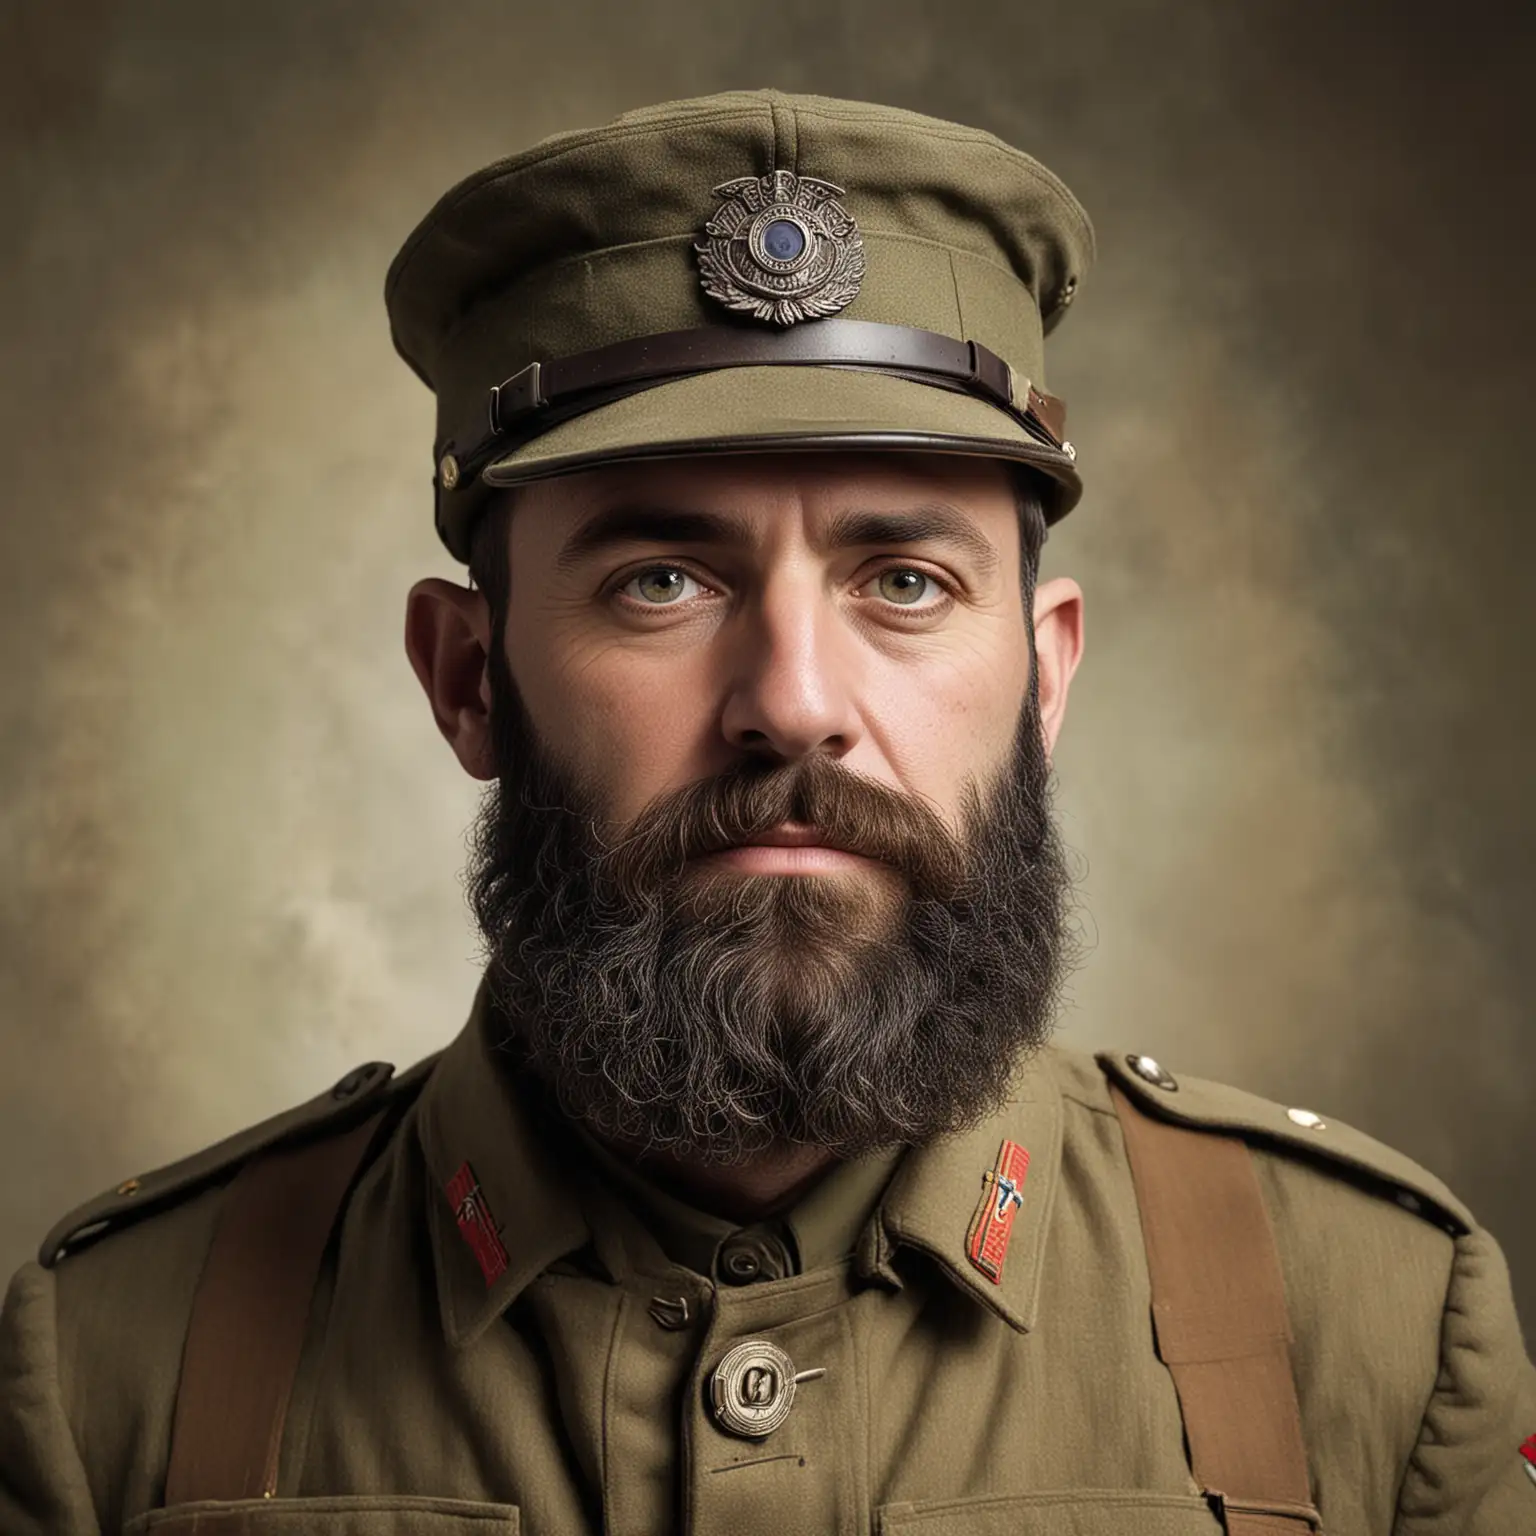 Weathered World War One Veteran with Dark Beard and Singular Gaze